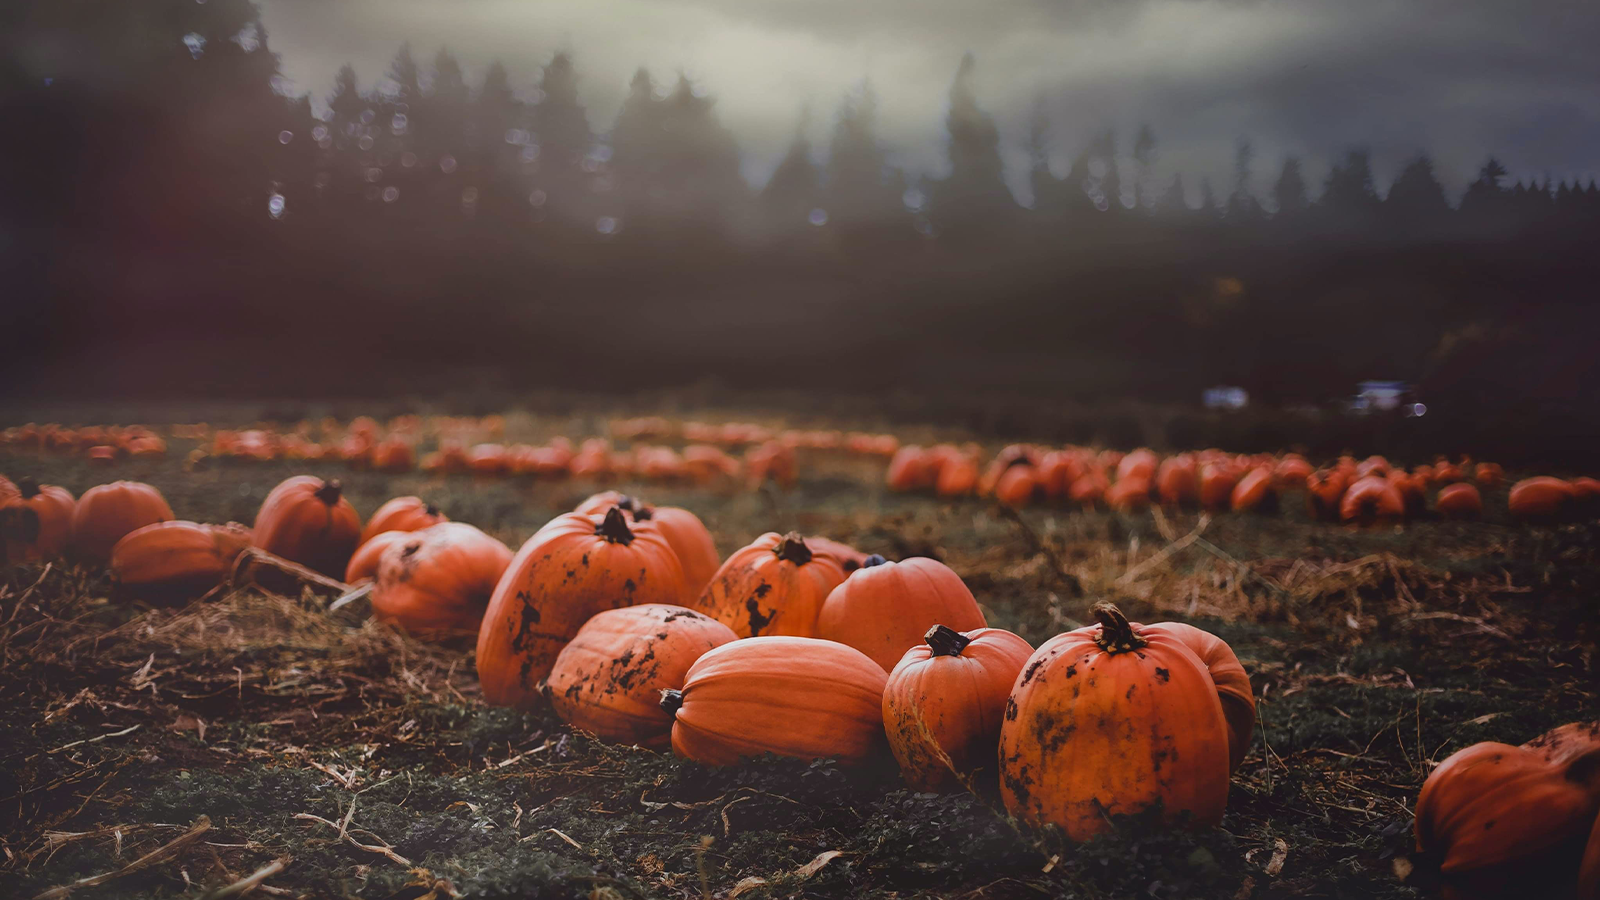 dark, foggy night with pumpkins in a field